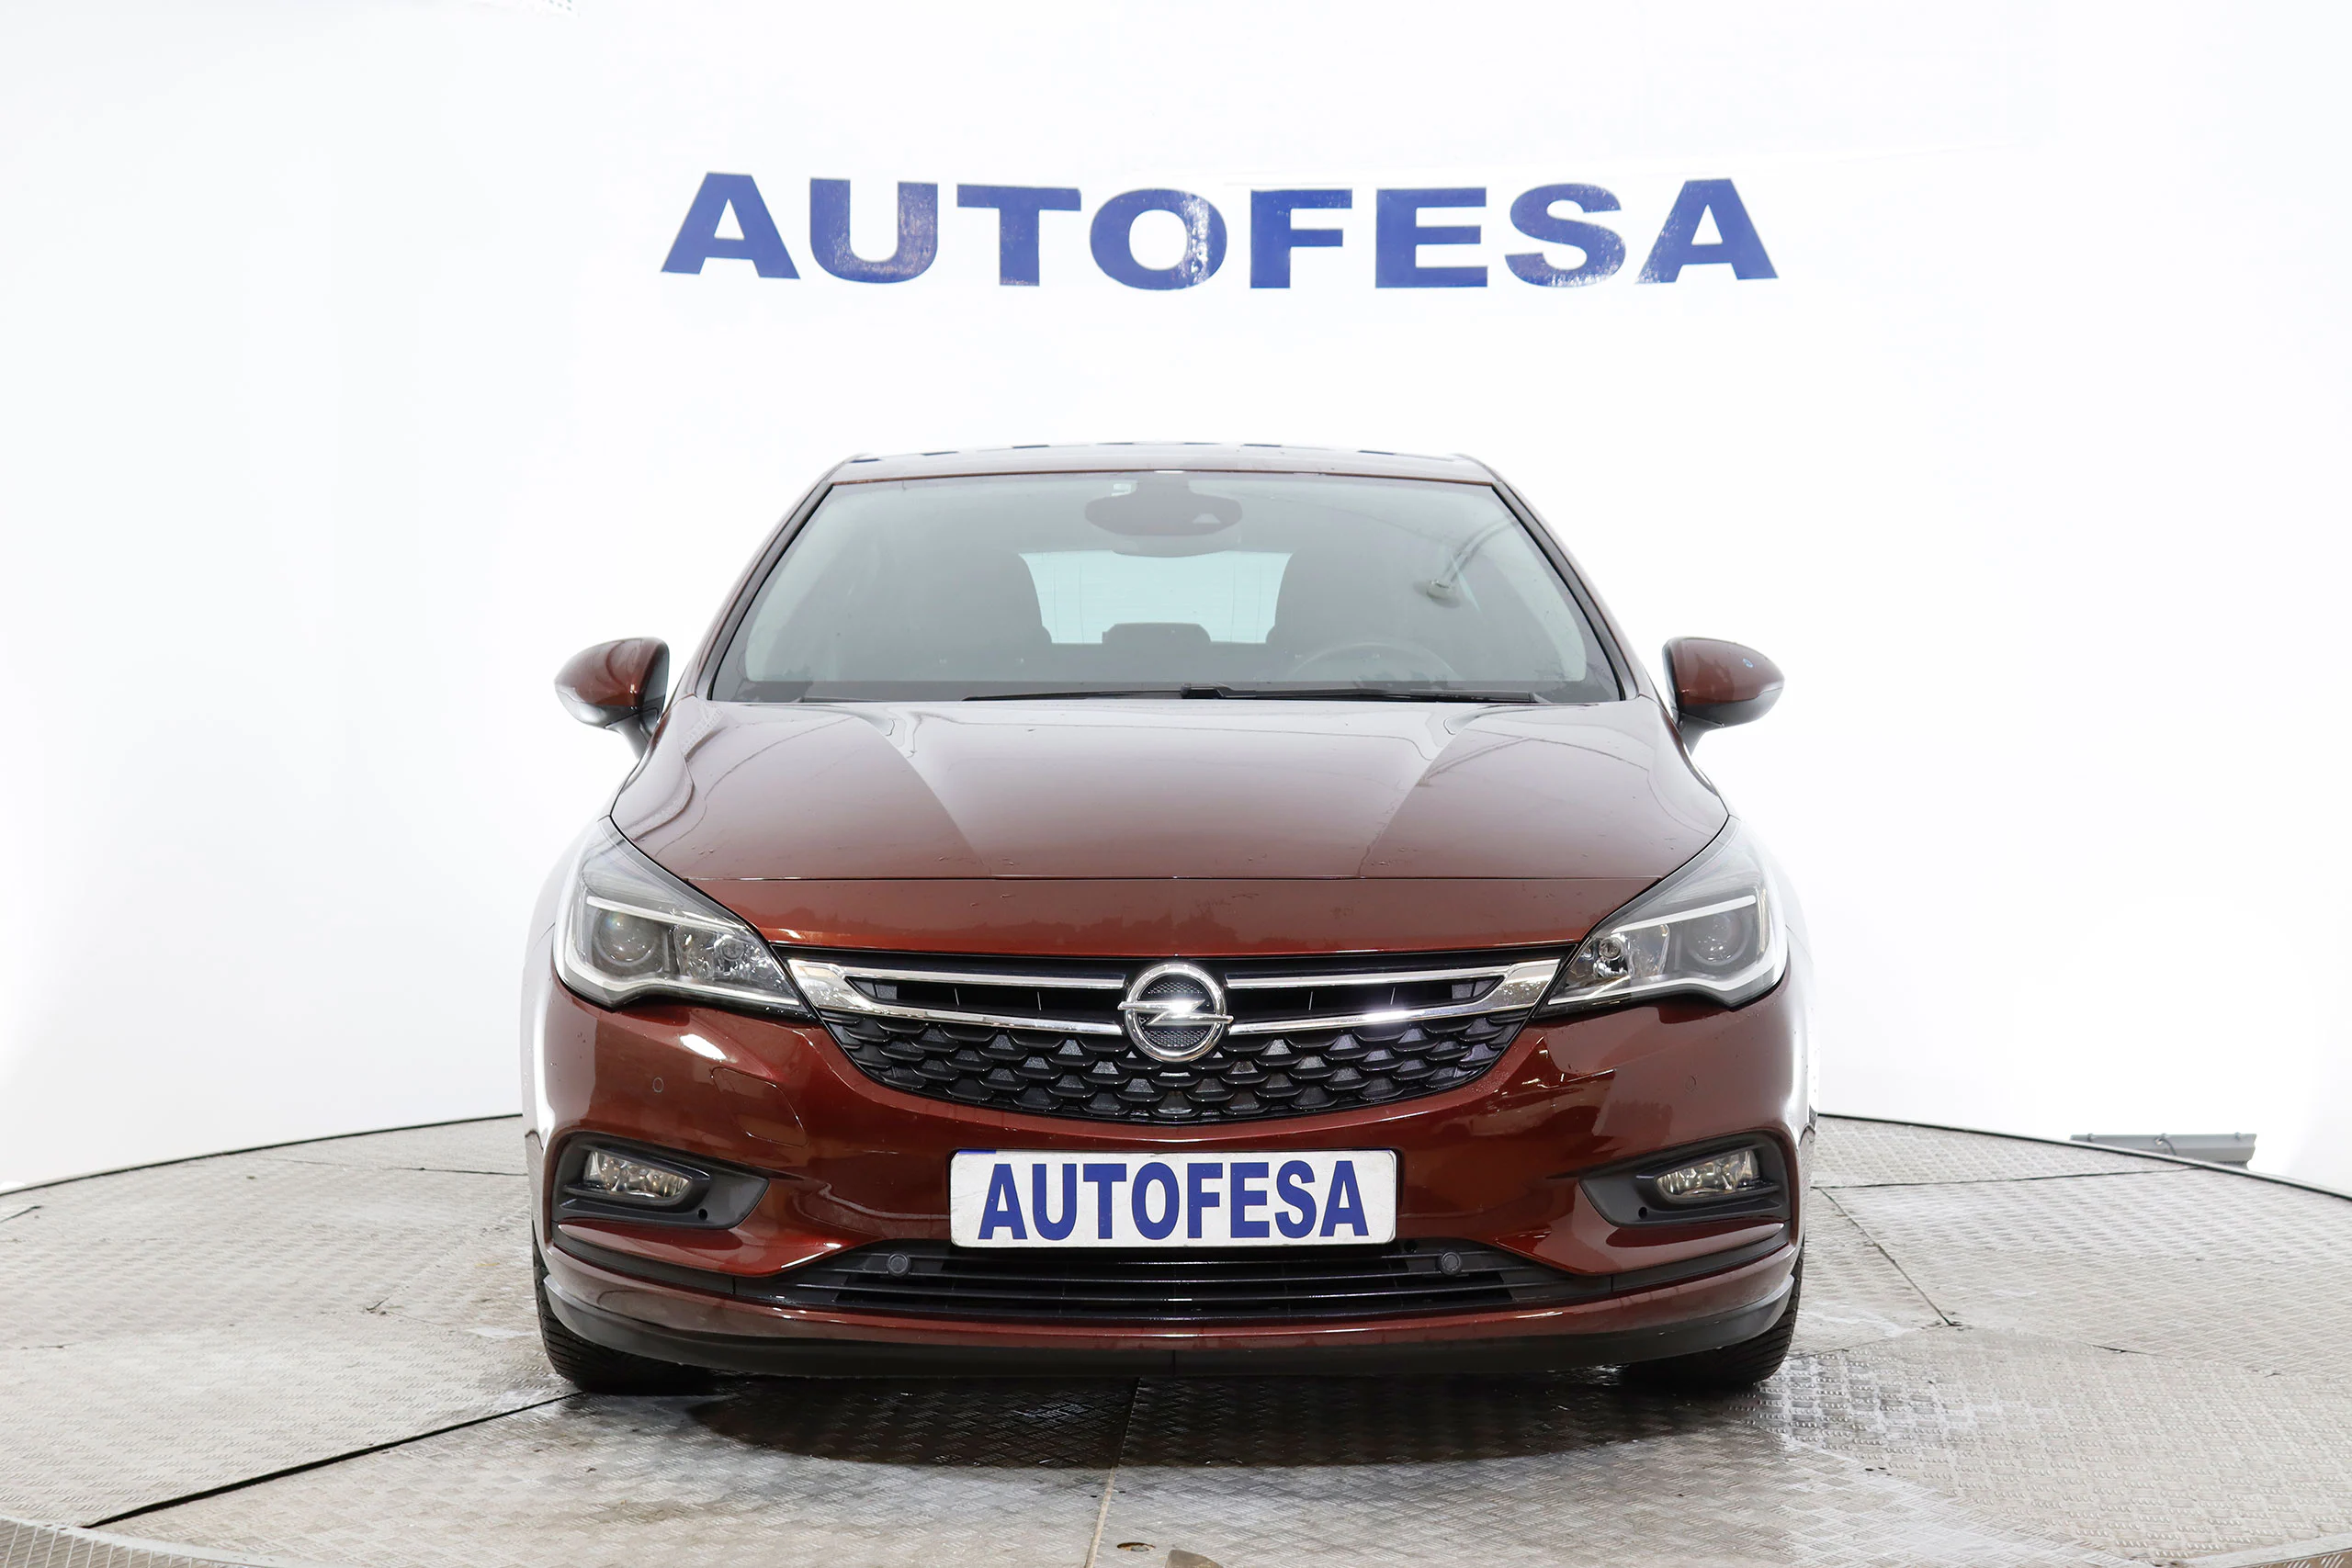 Opel Astra 1.6 CDTI Dynamic 136cv 5P S/S # CUERO - Foto 2